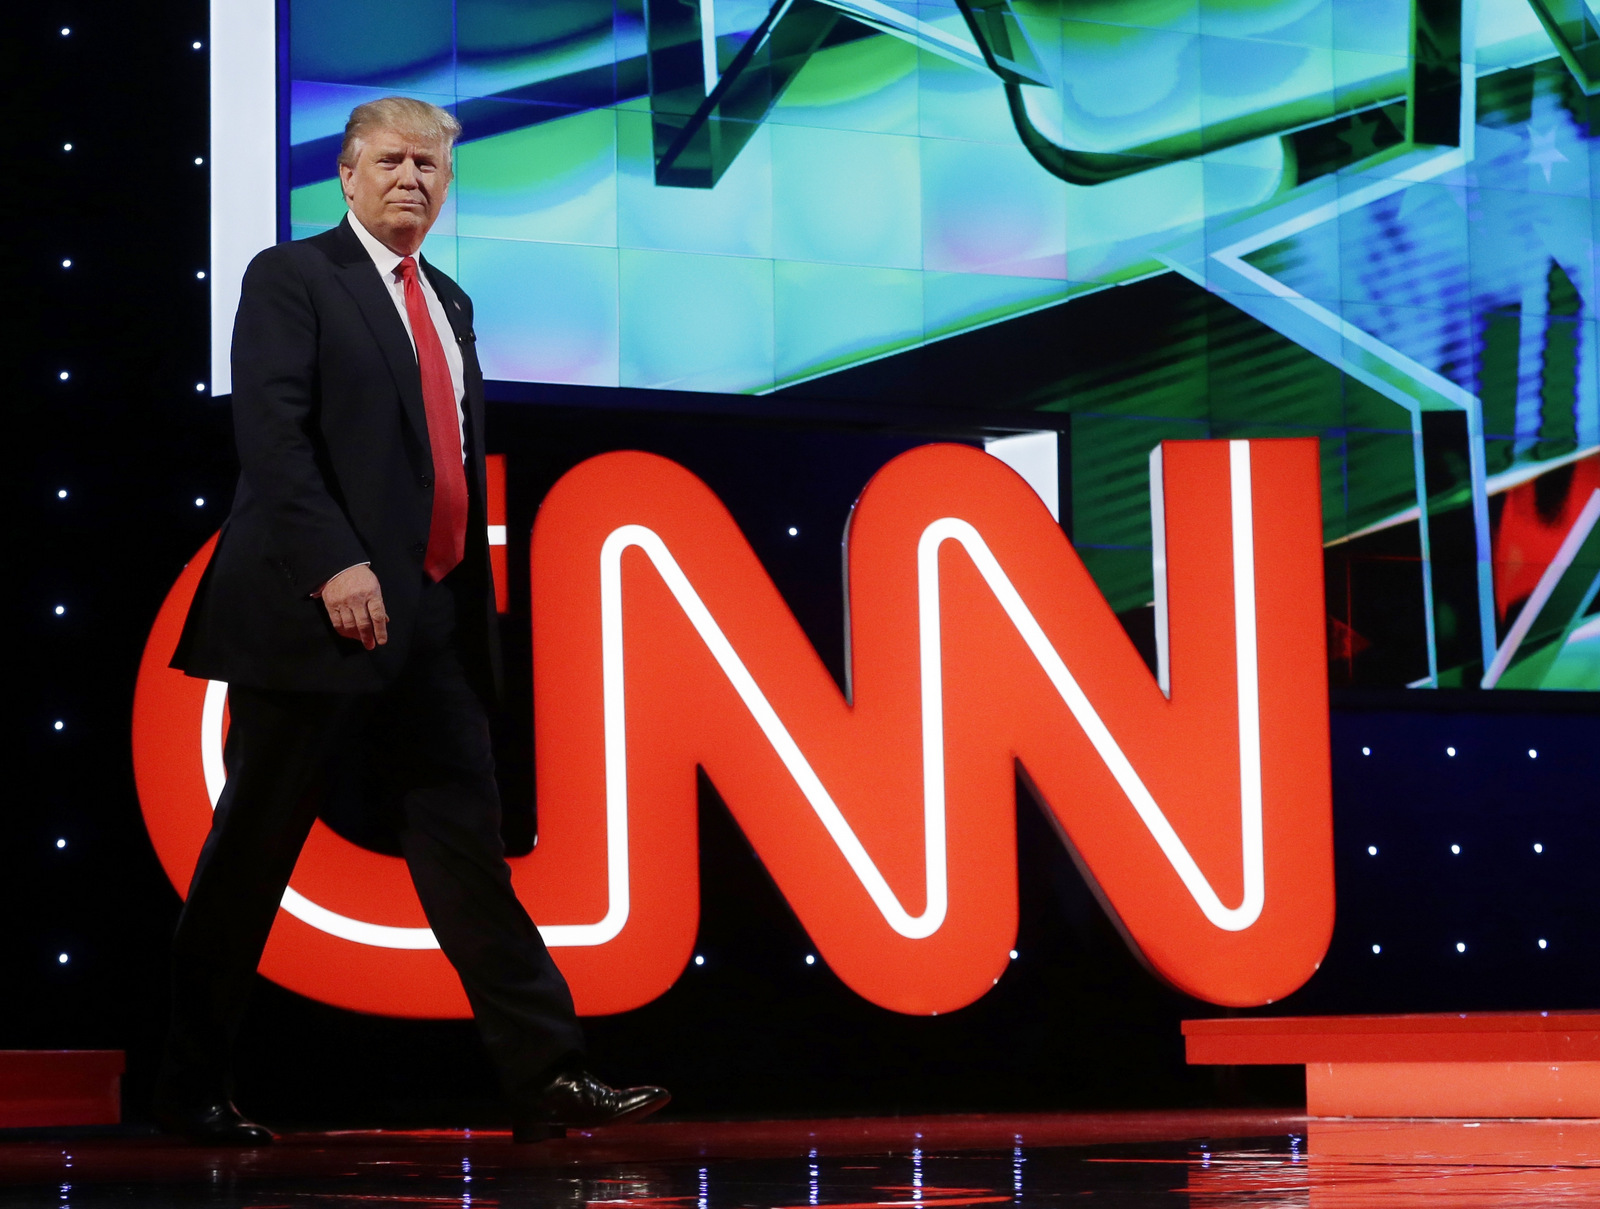 Donald Trump enters the debate hall during the Republican presidential debate sponsored by CNN, March 10, 2016. (AP/Alan Diaz)